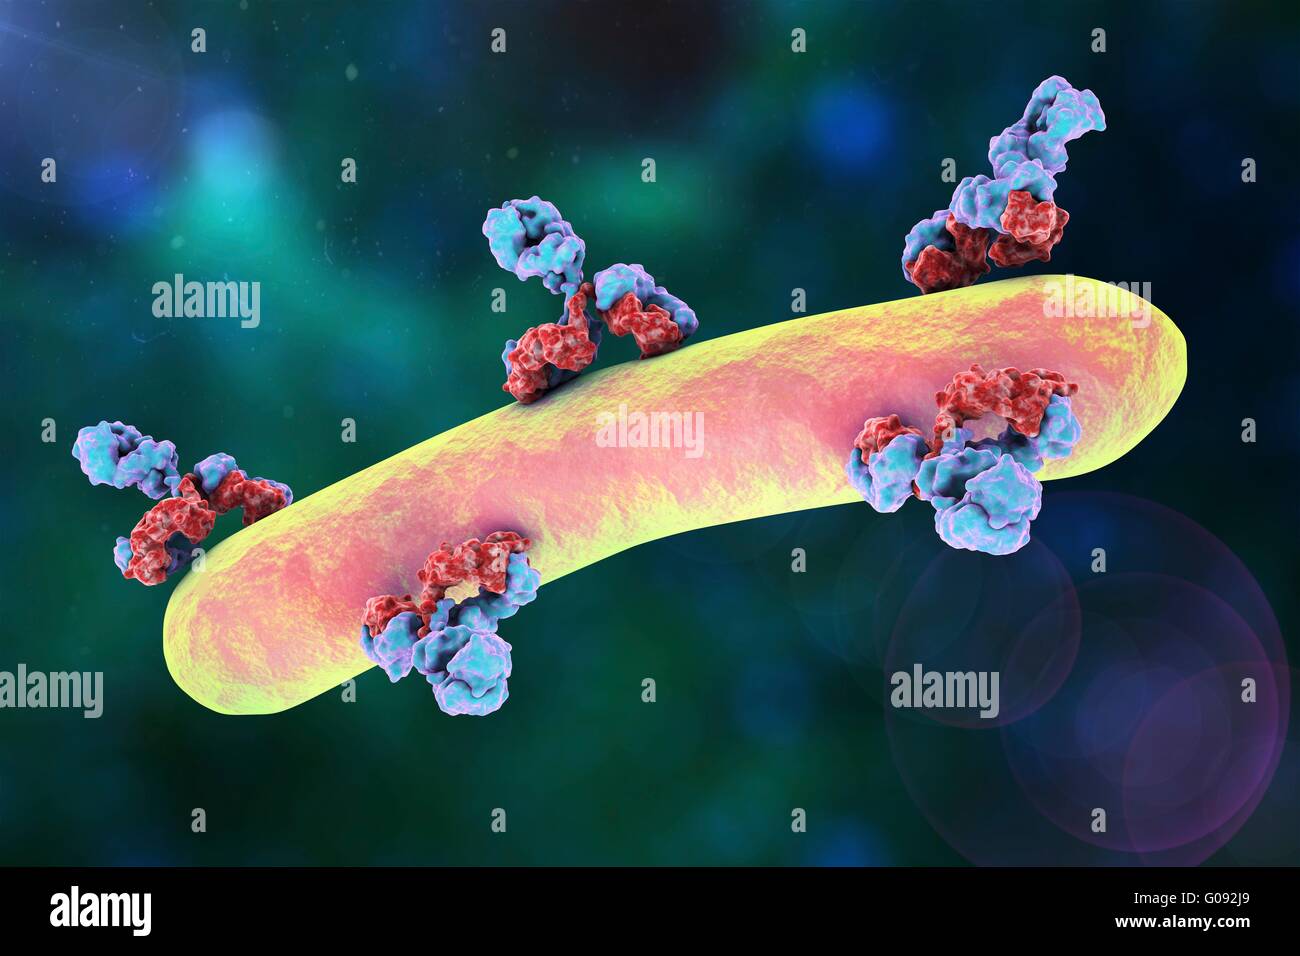 Antibodies attacking bacterium, illustration, conceptual image. Stock Photo